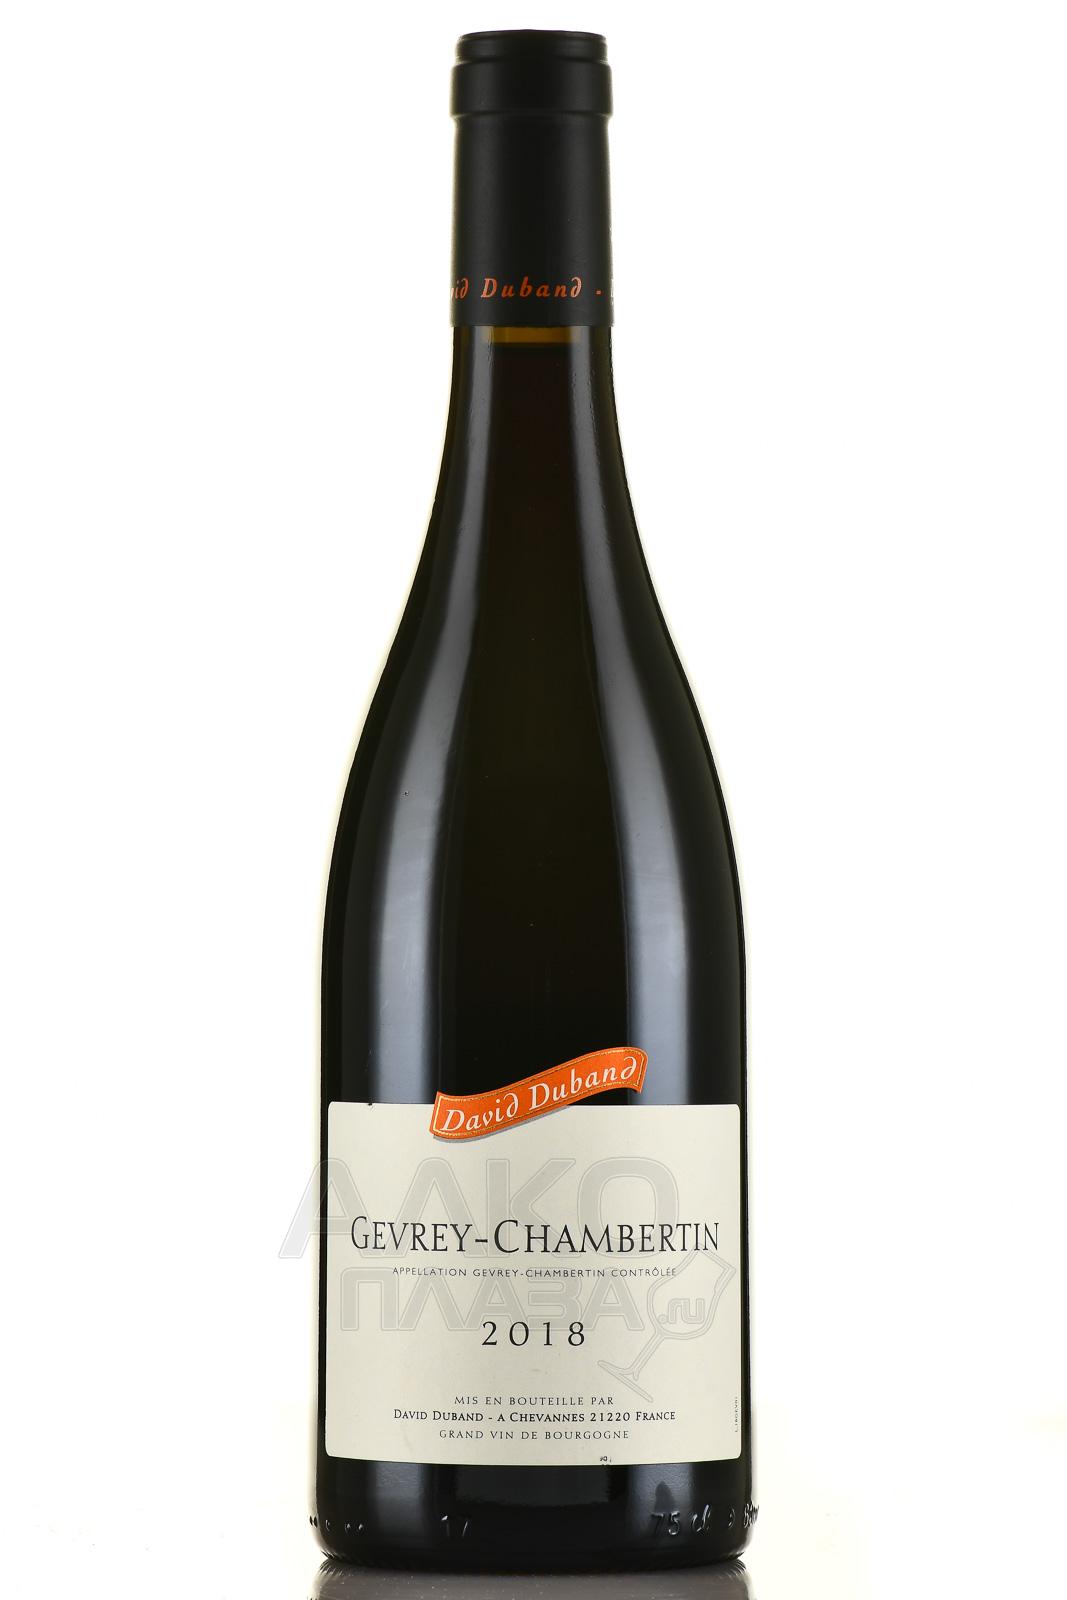 David Duband Gevrey-Chambertin Французское вино Давид Дюбан Жевре-Шамбертен